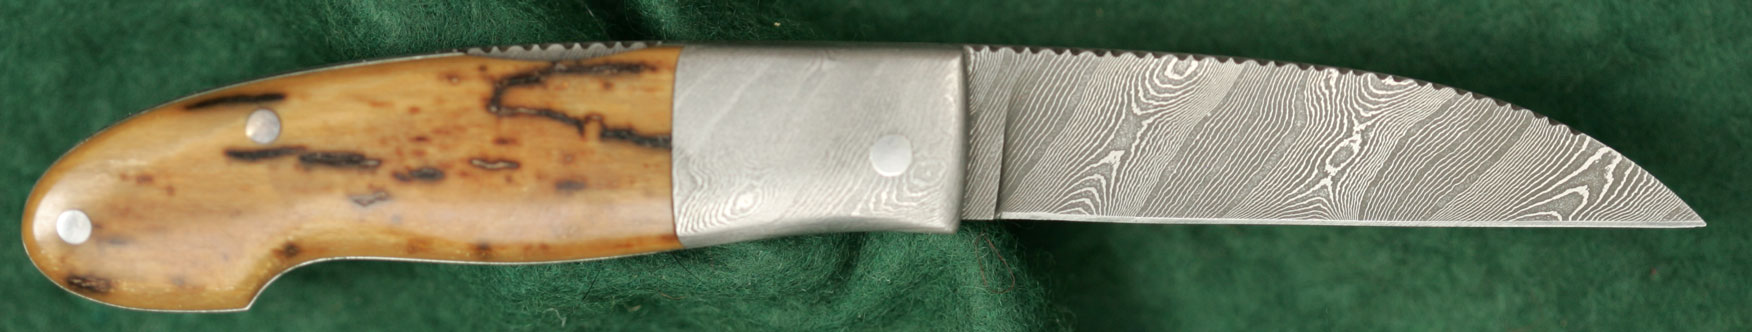 John Perry MS, custom knives, knife purveyor, custom knife